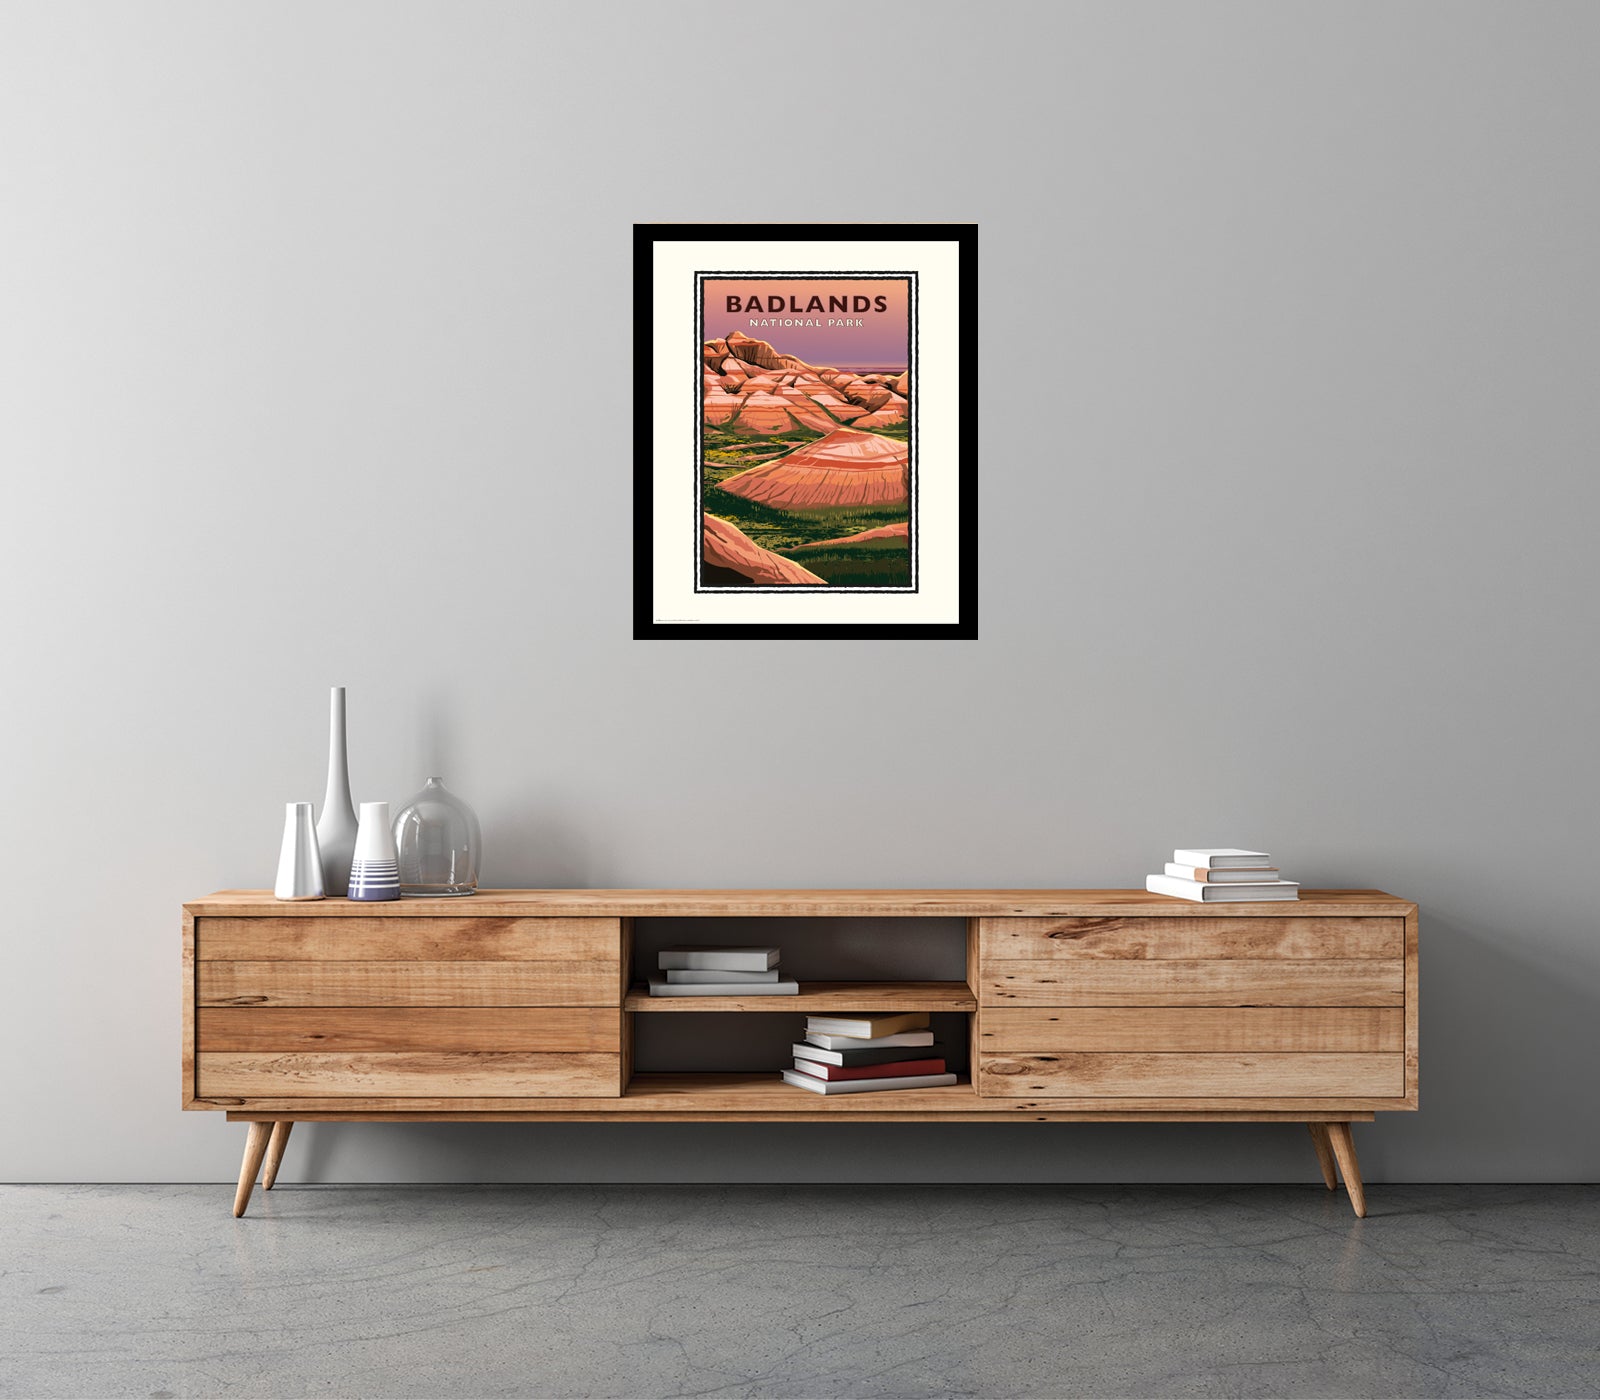 Landmark SD | Badlands National Park Art Print